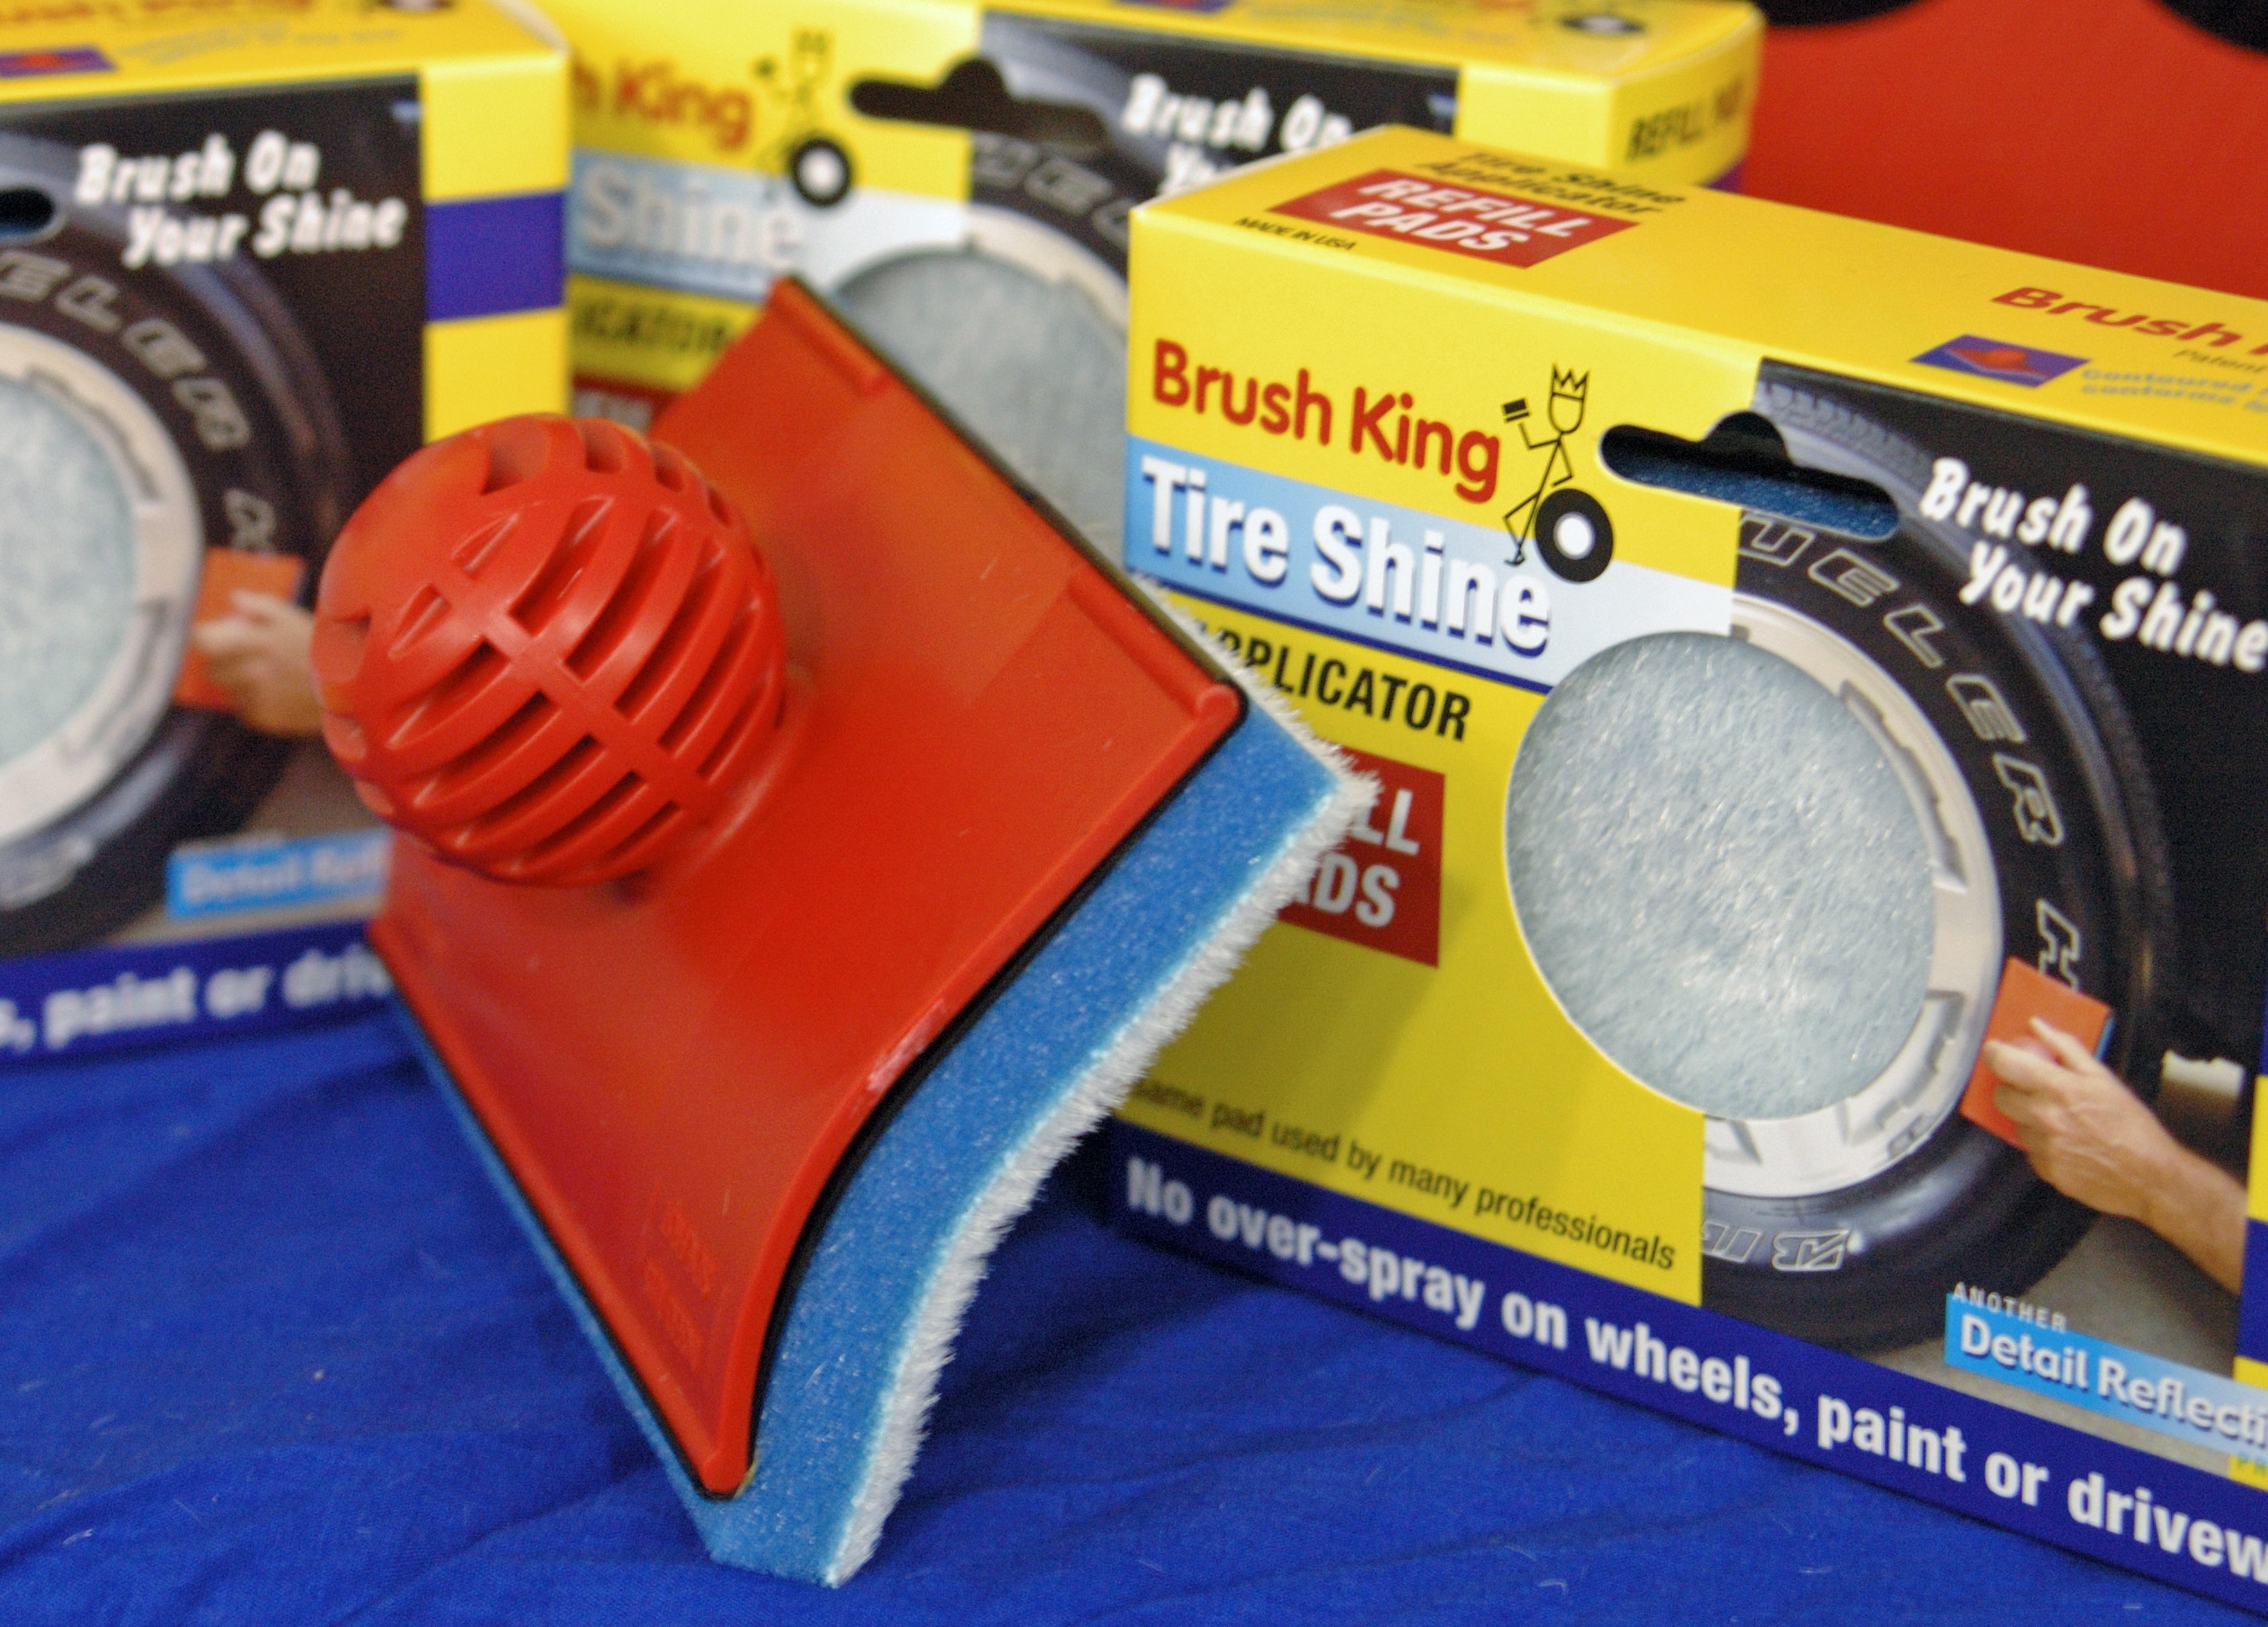 Brush King - Tire Shine Applicator and Detailing Tool